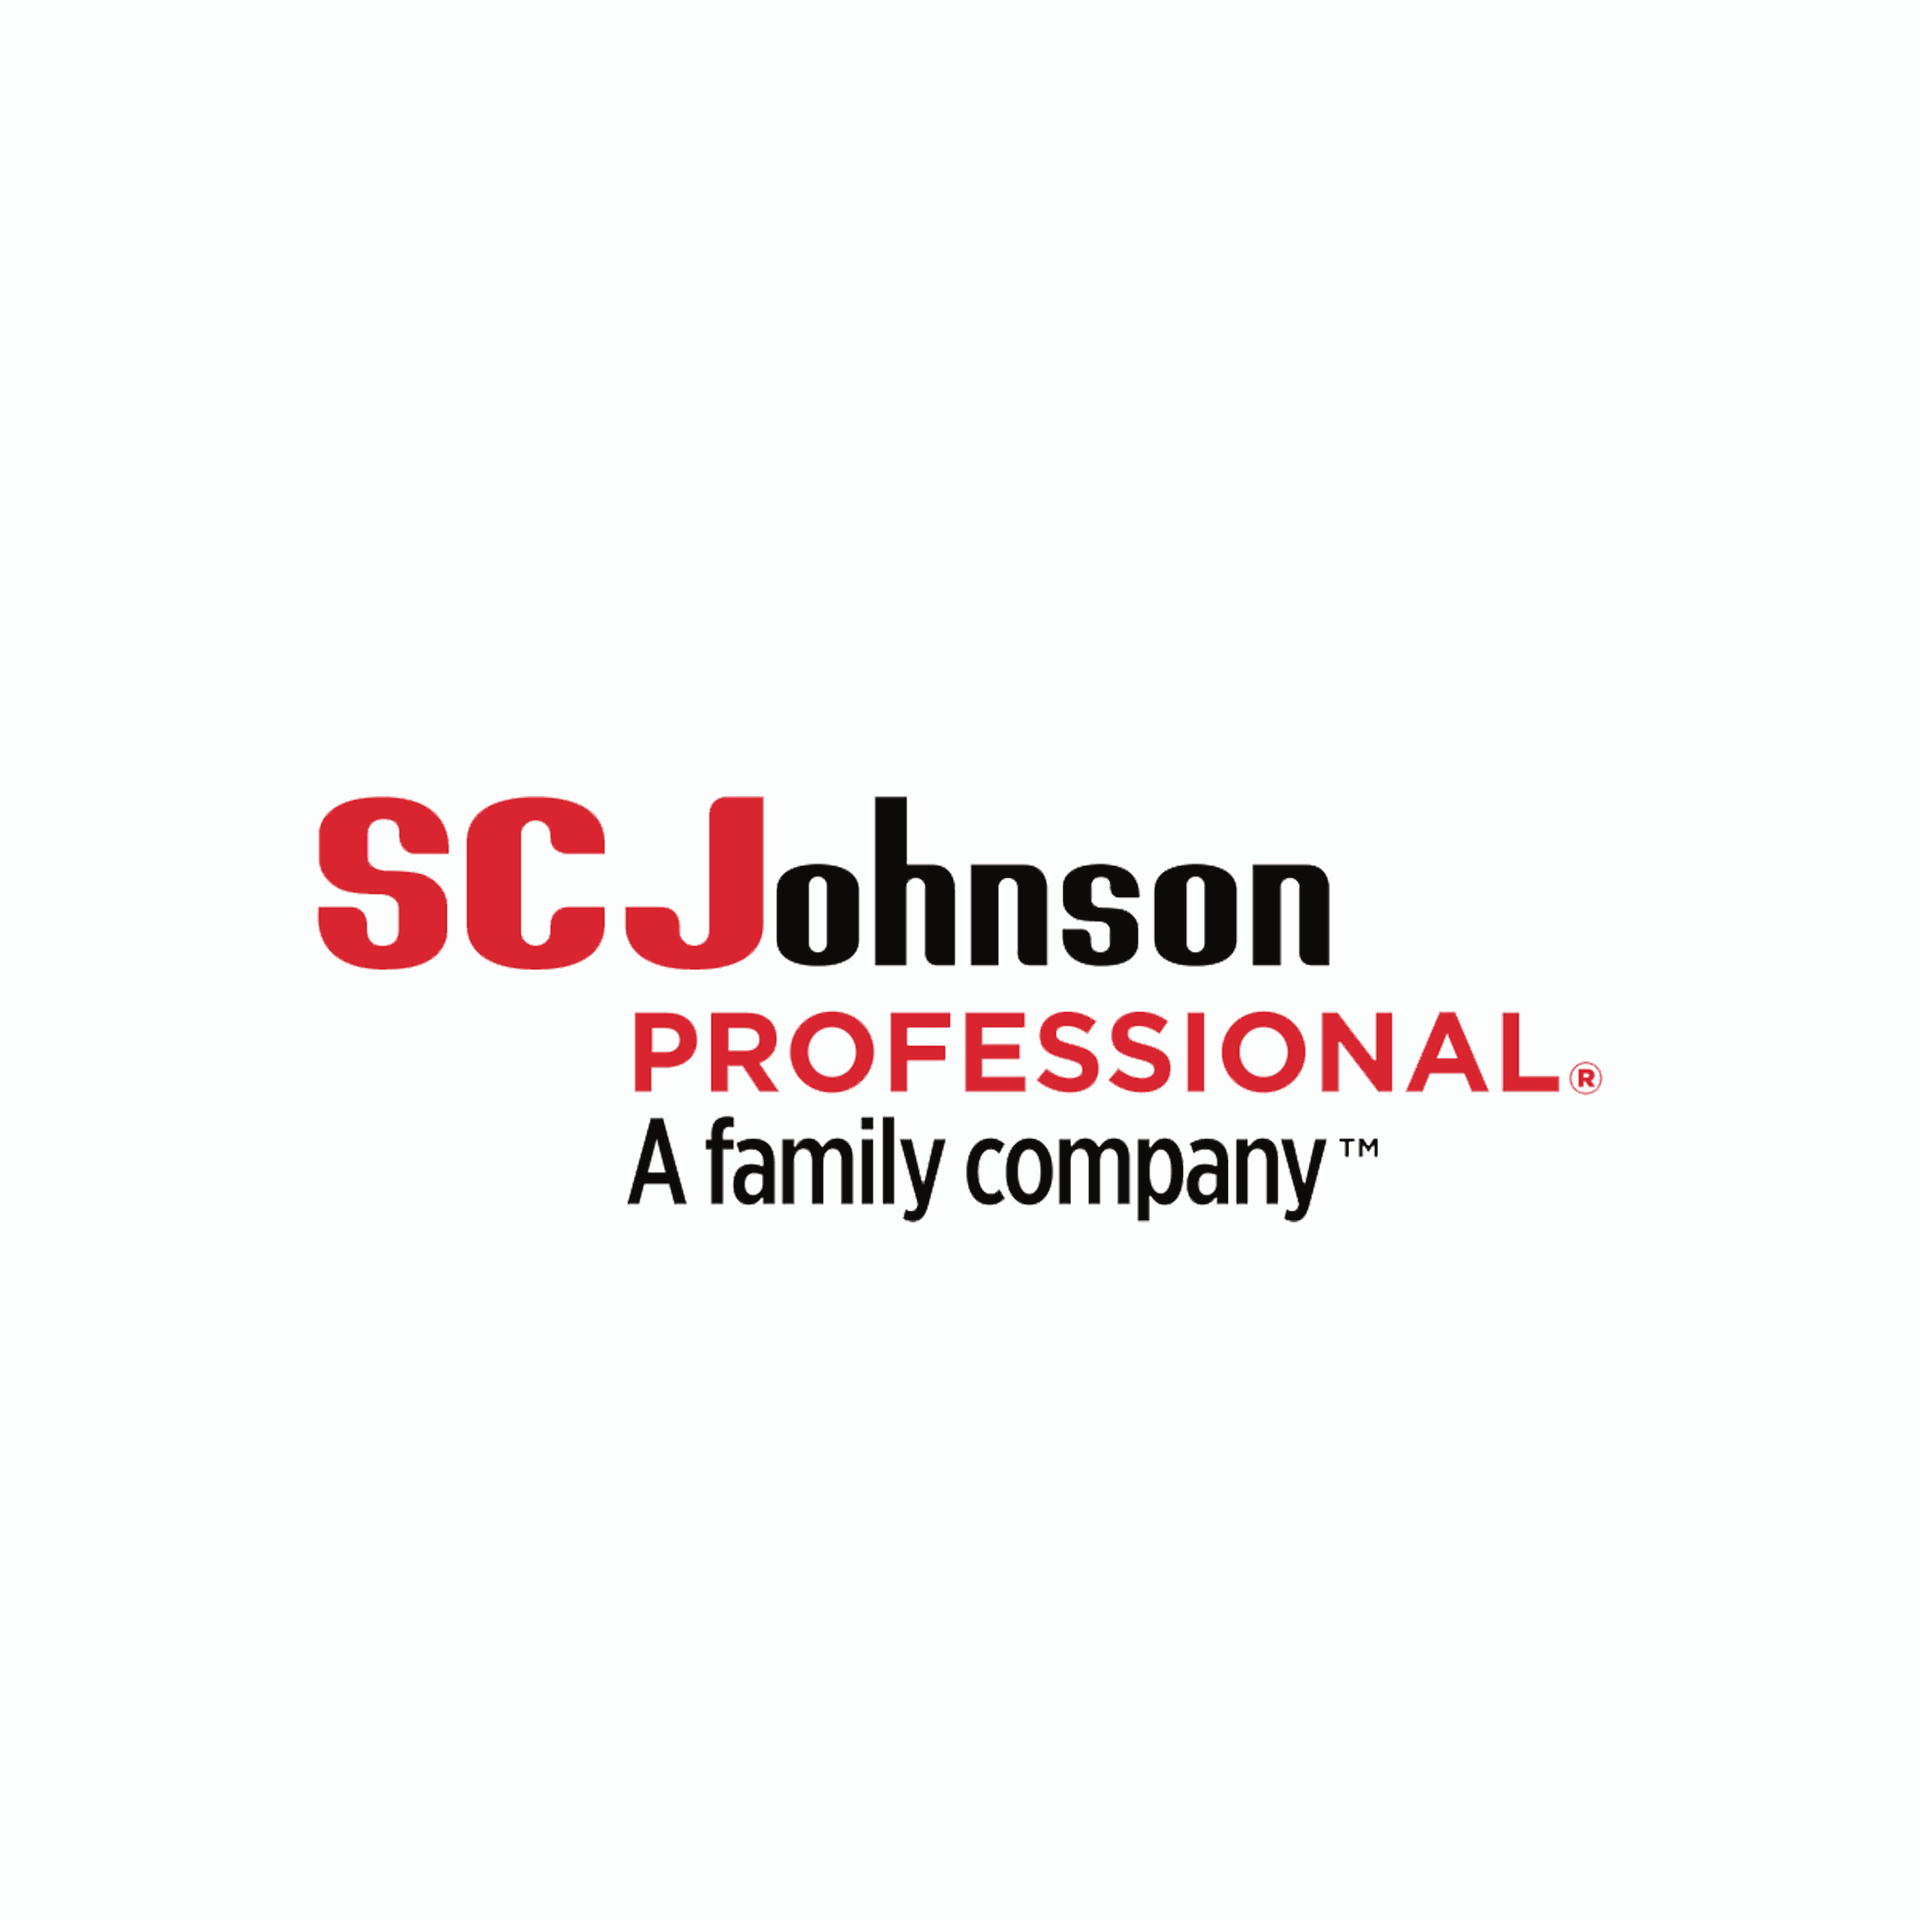 Product Brand: SC Johnson